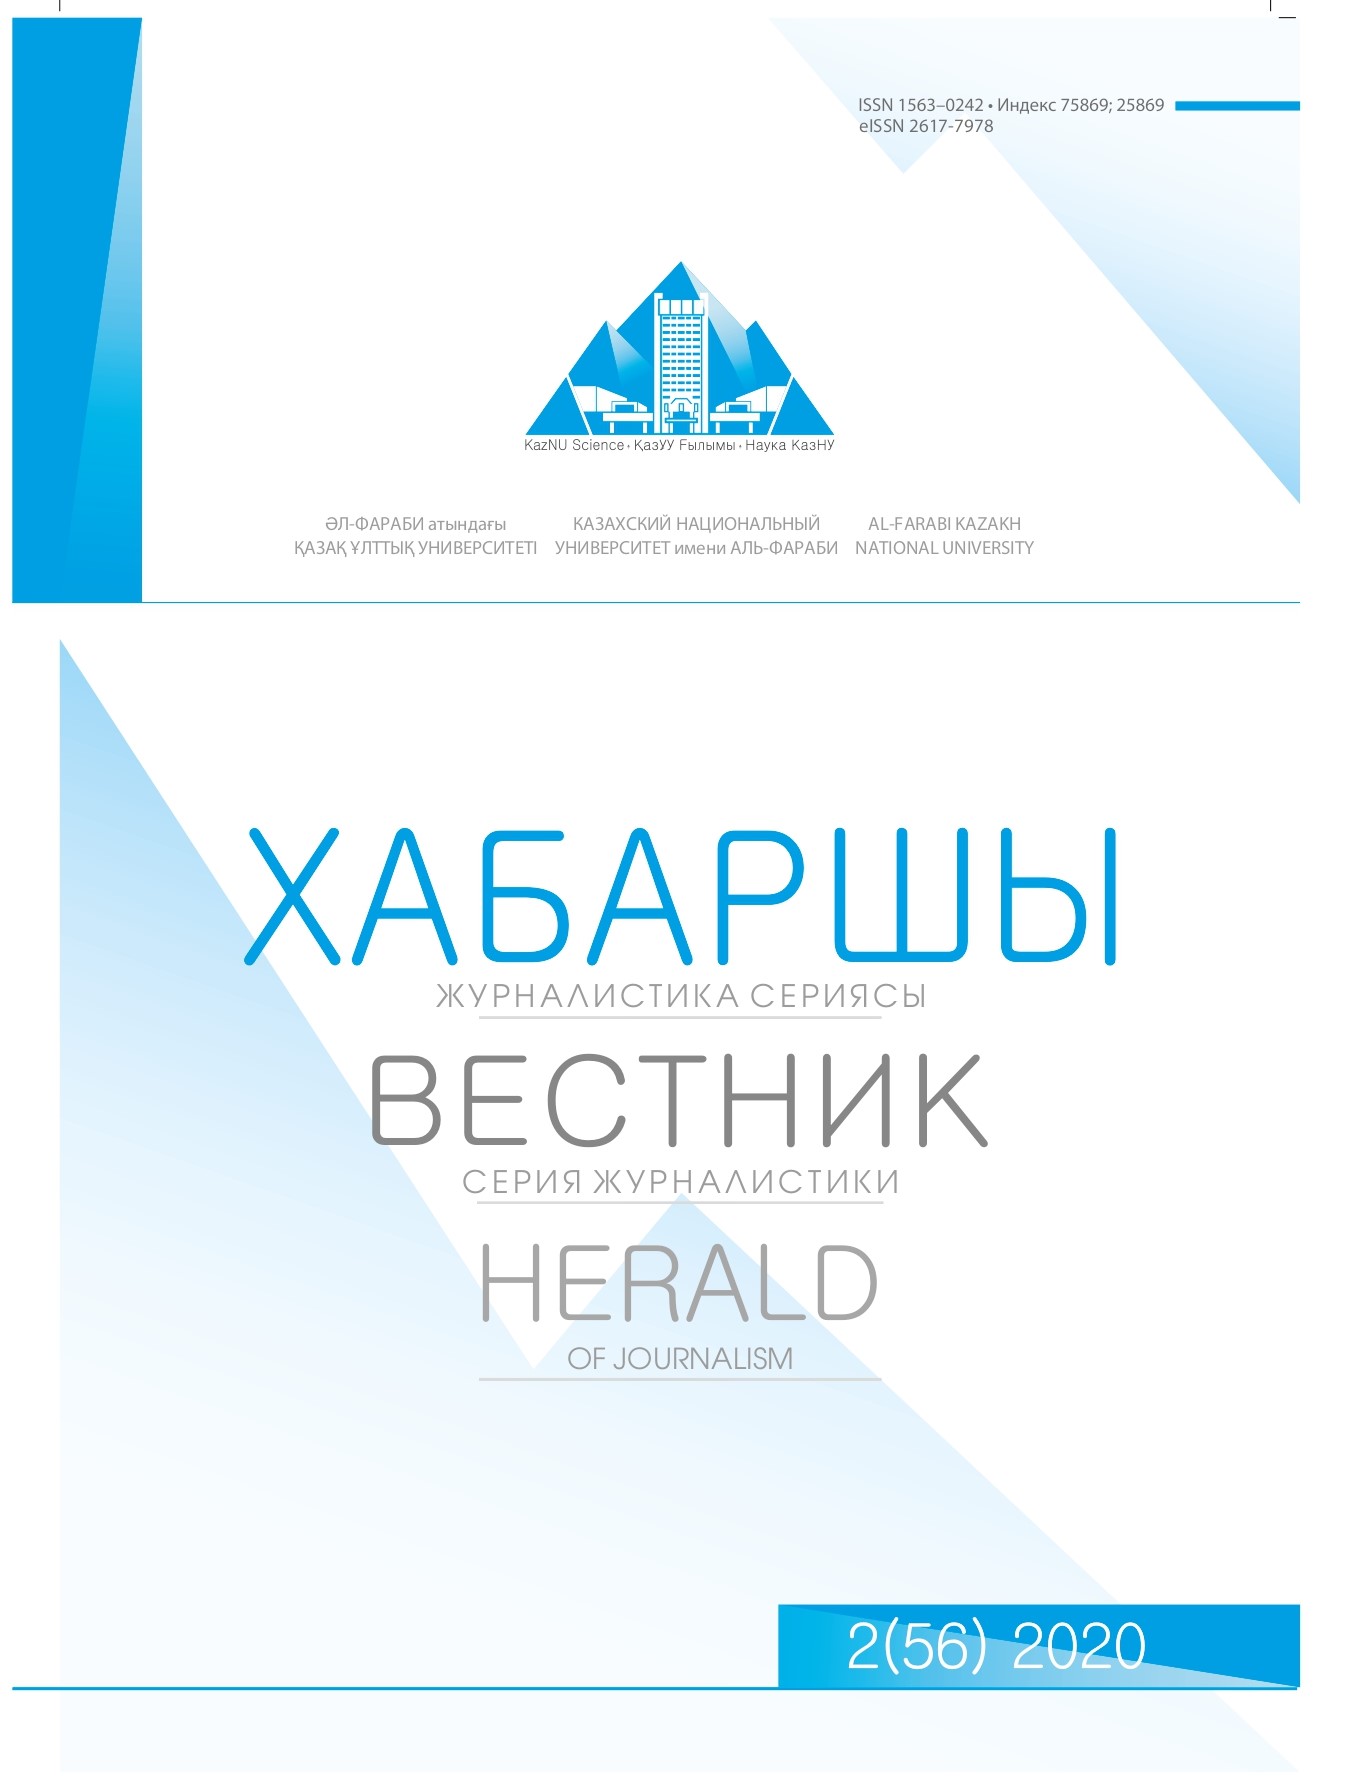 					View Vol. 56 No. 2 (2020): Al-Farabi kazakh national university. Herald of journalism
				